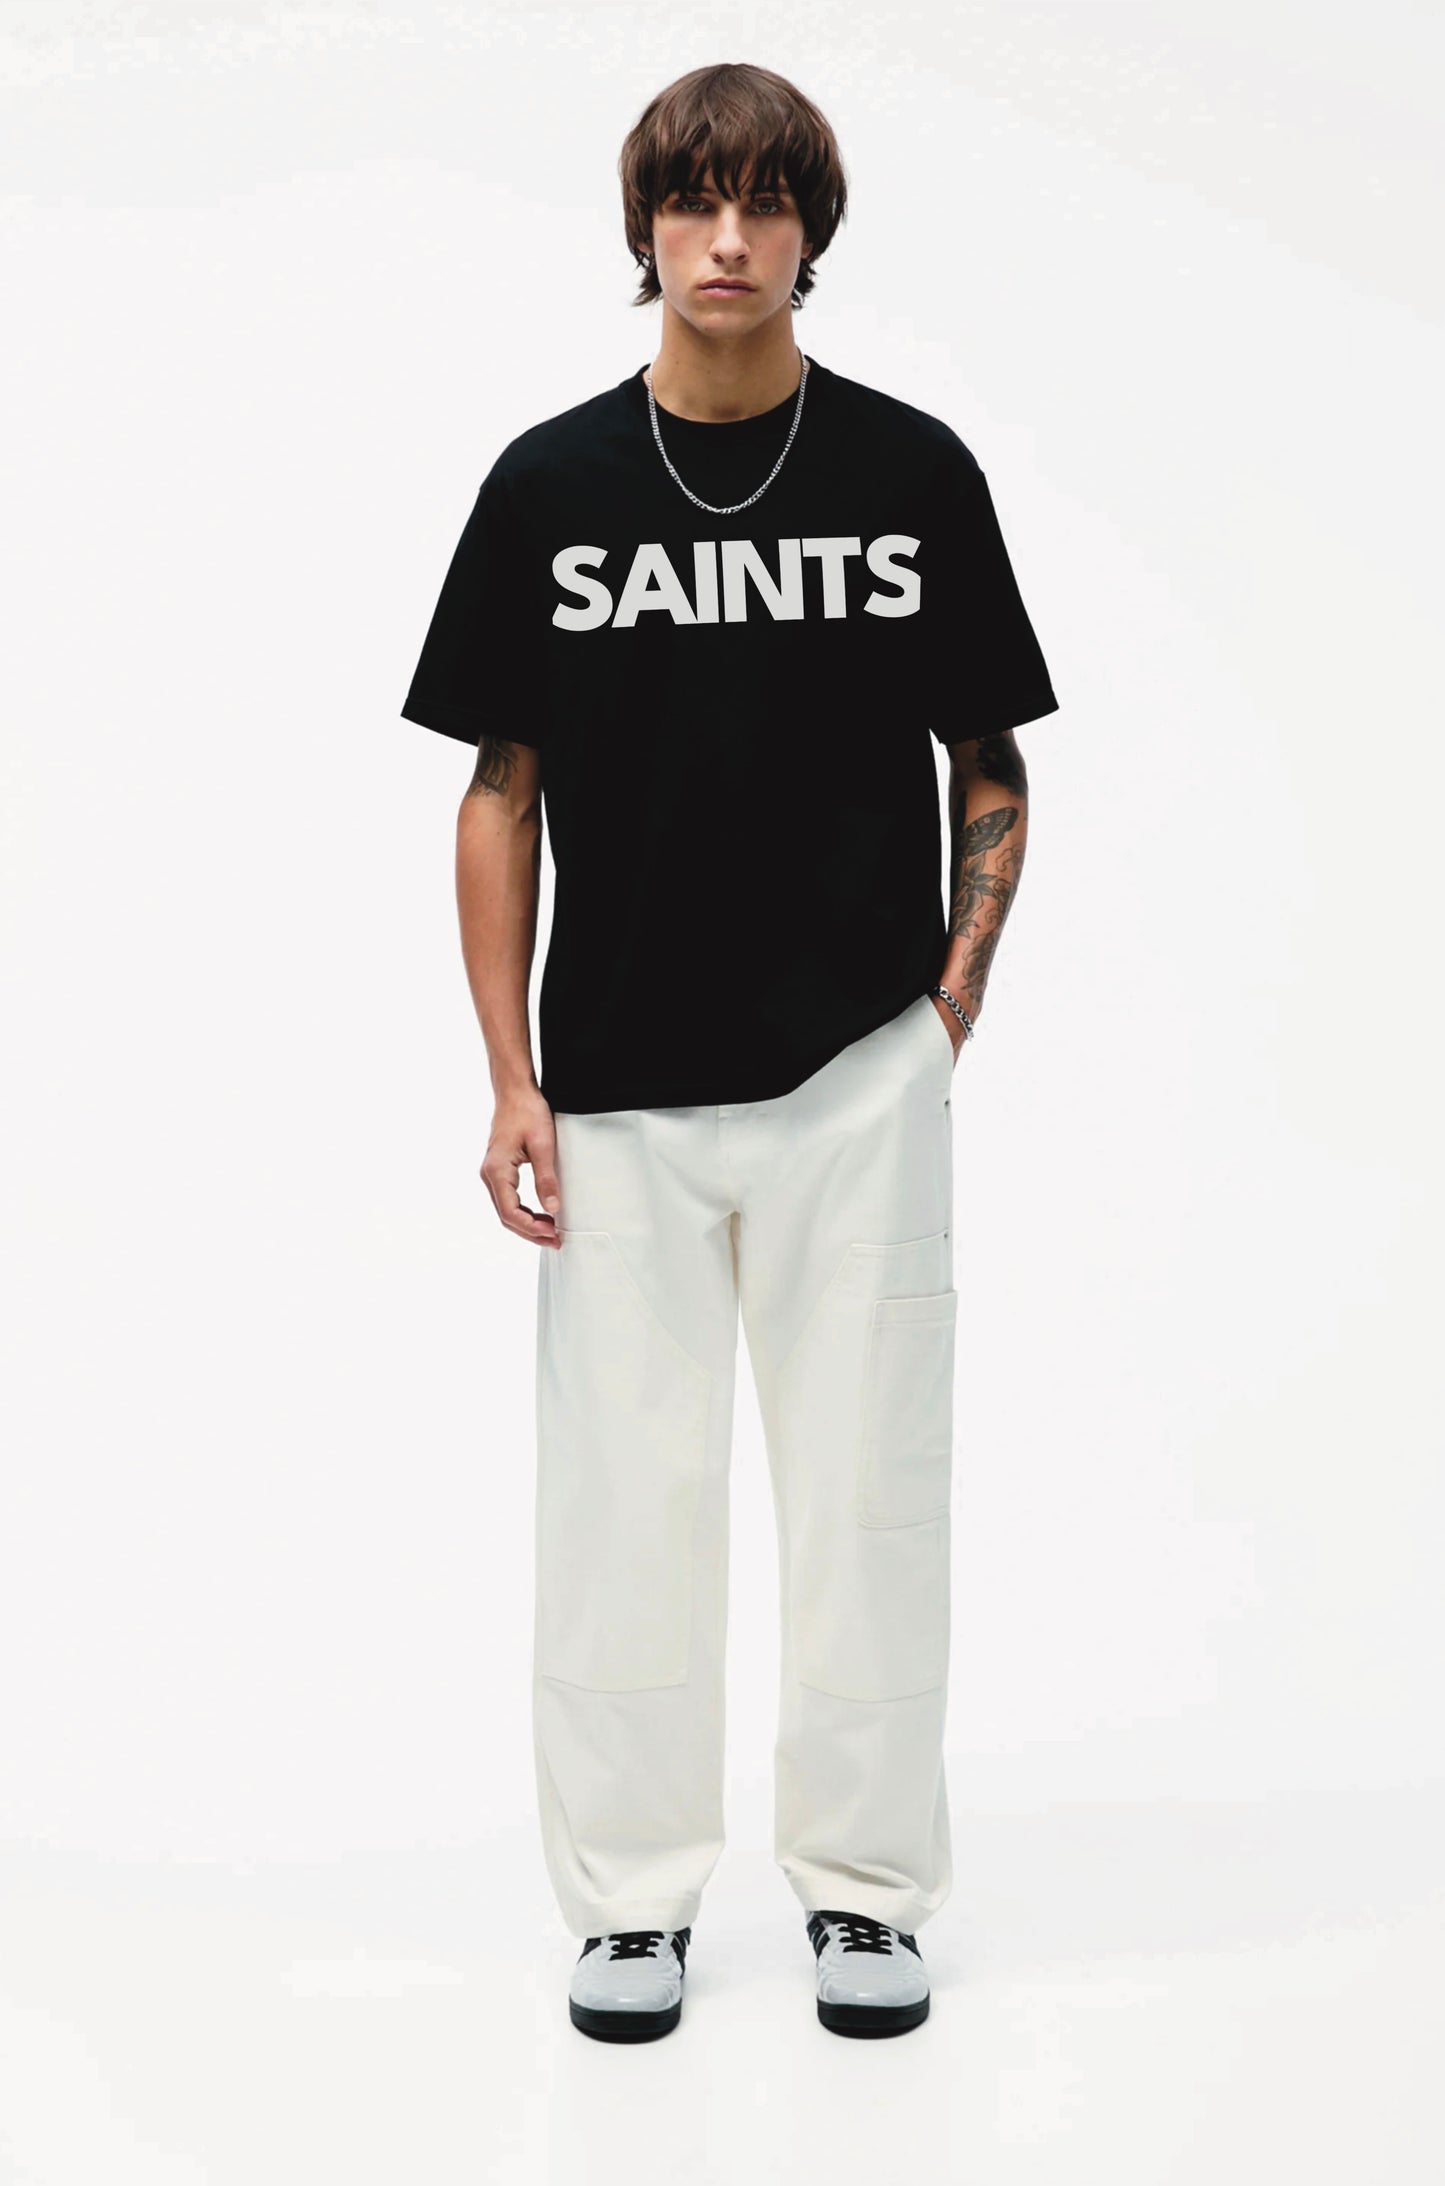 Saints signature tshirt